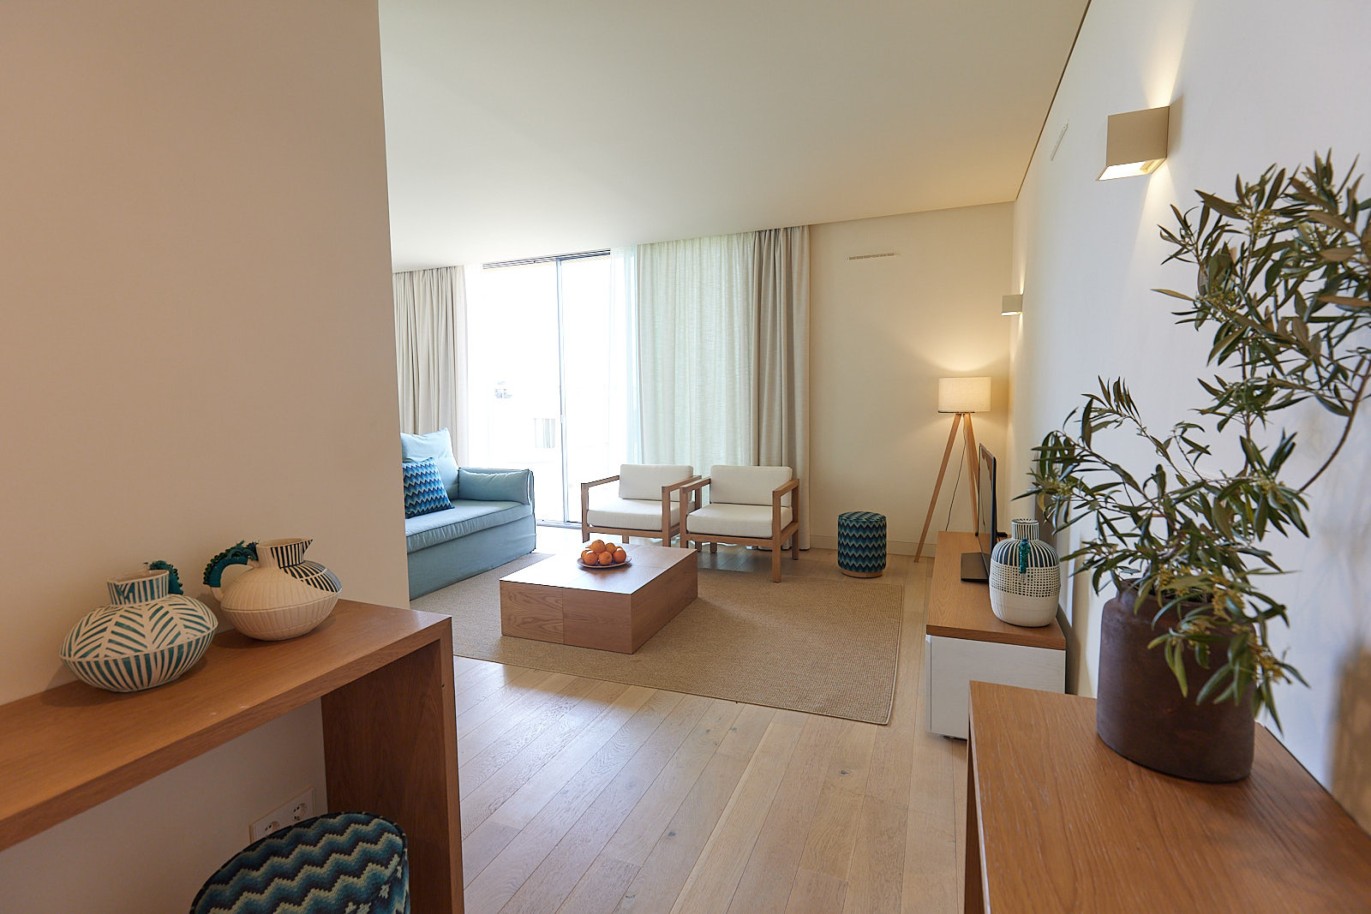 2 bedroom apartment in resort, for sale in Porches, Algarve_230551